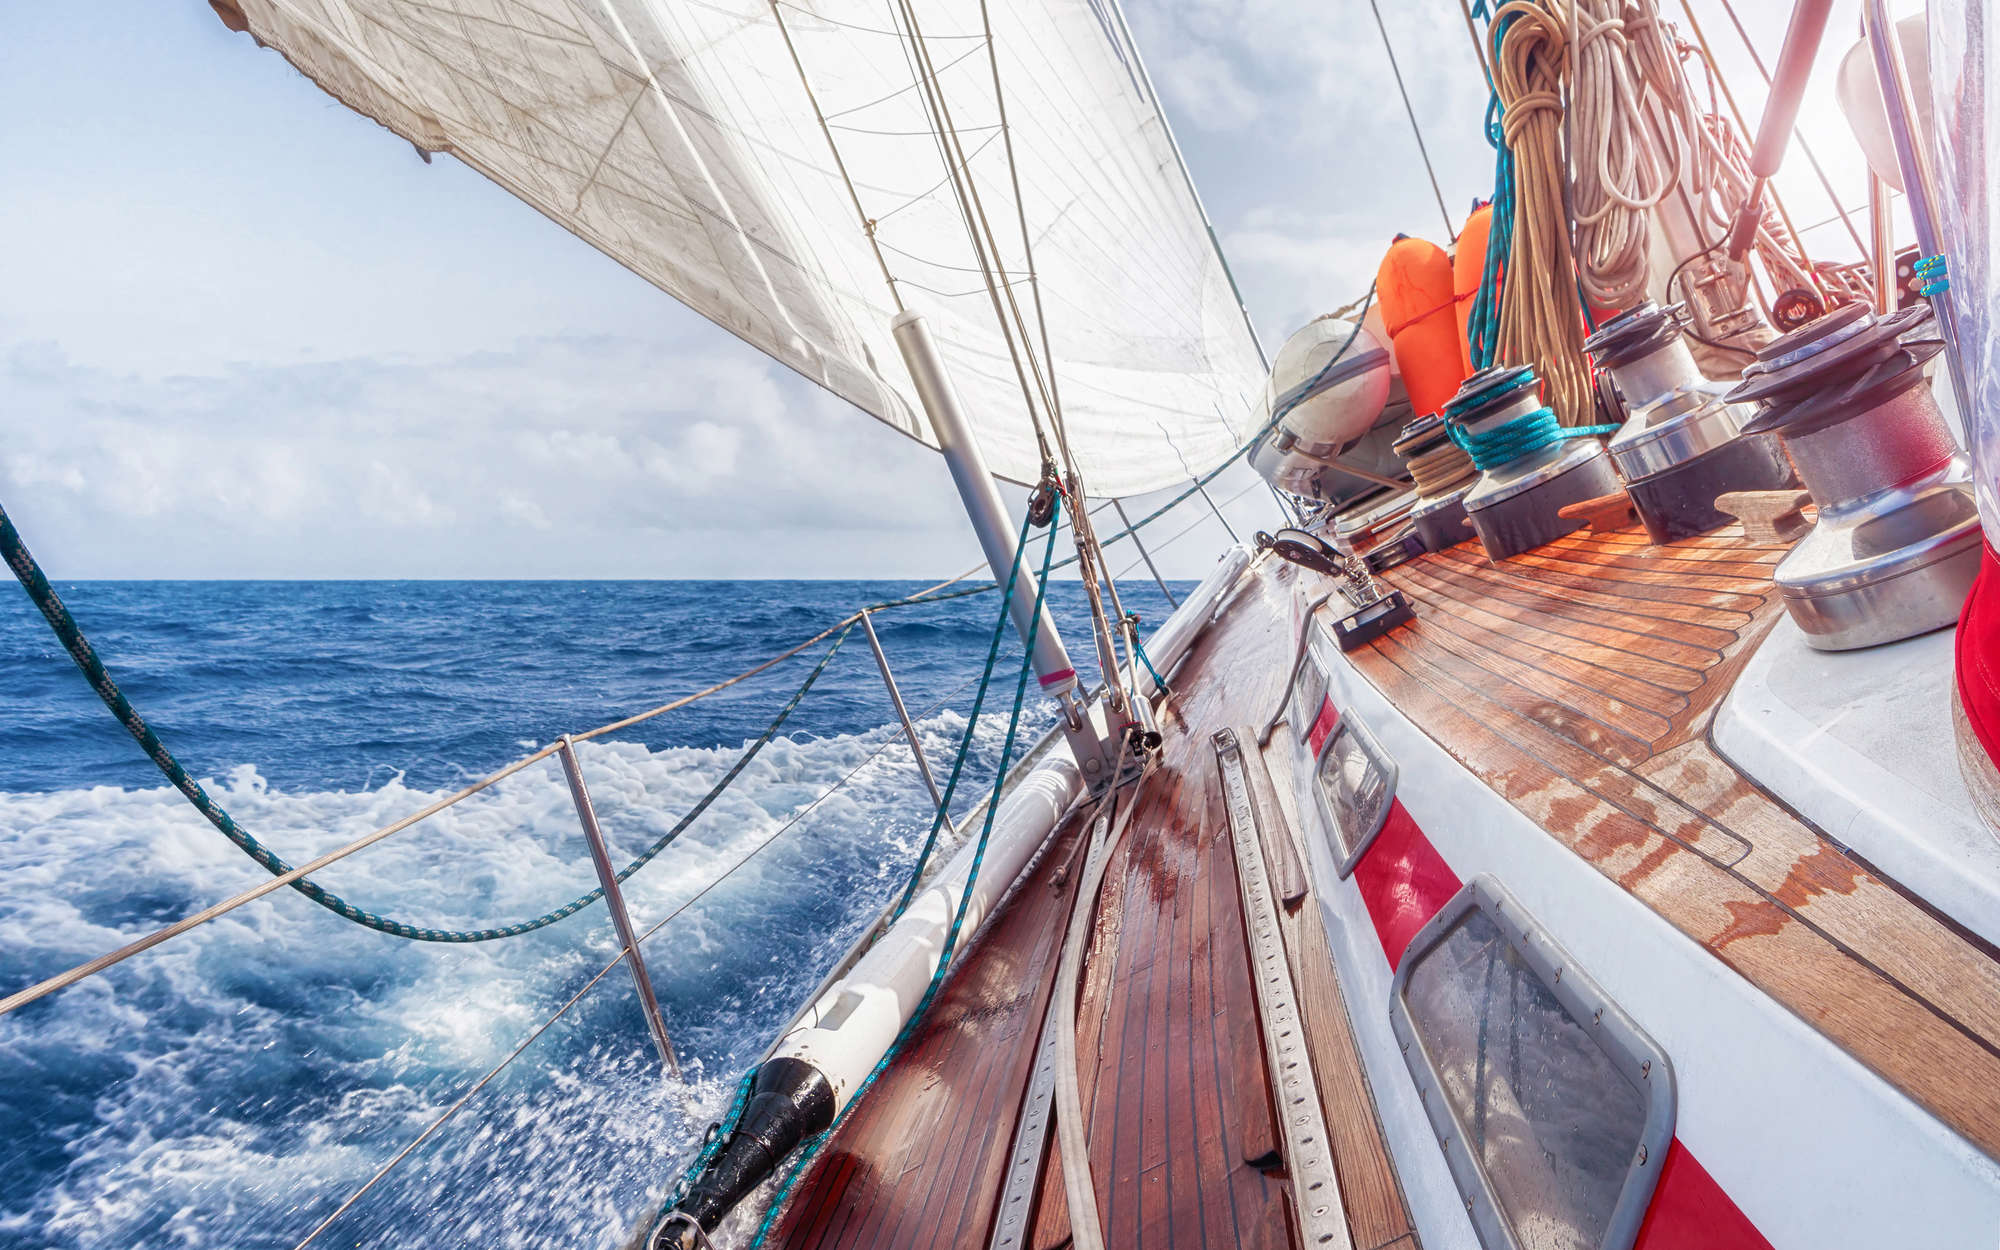             Fototapete Segelboot auf dem Meer – Mattes Glattvlies
        